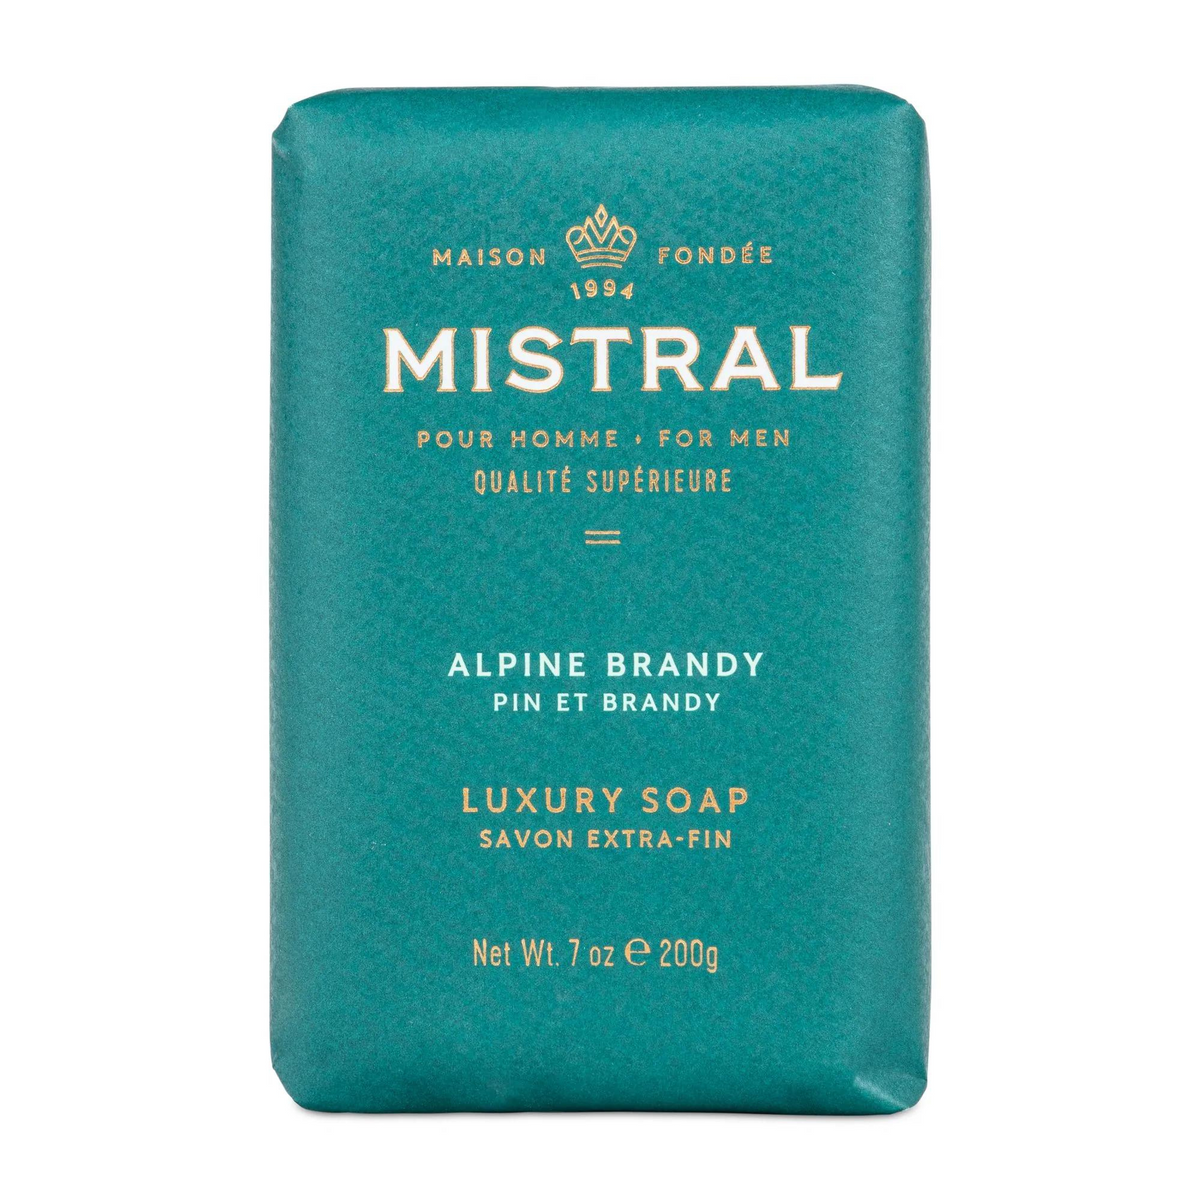 Primary Image of Mistral Alpine Brandy Bar Soap (7 oz)